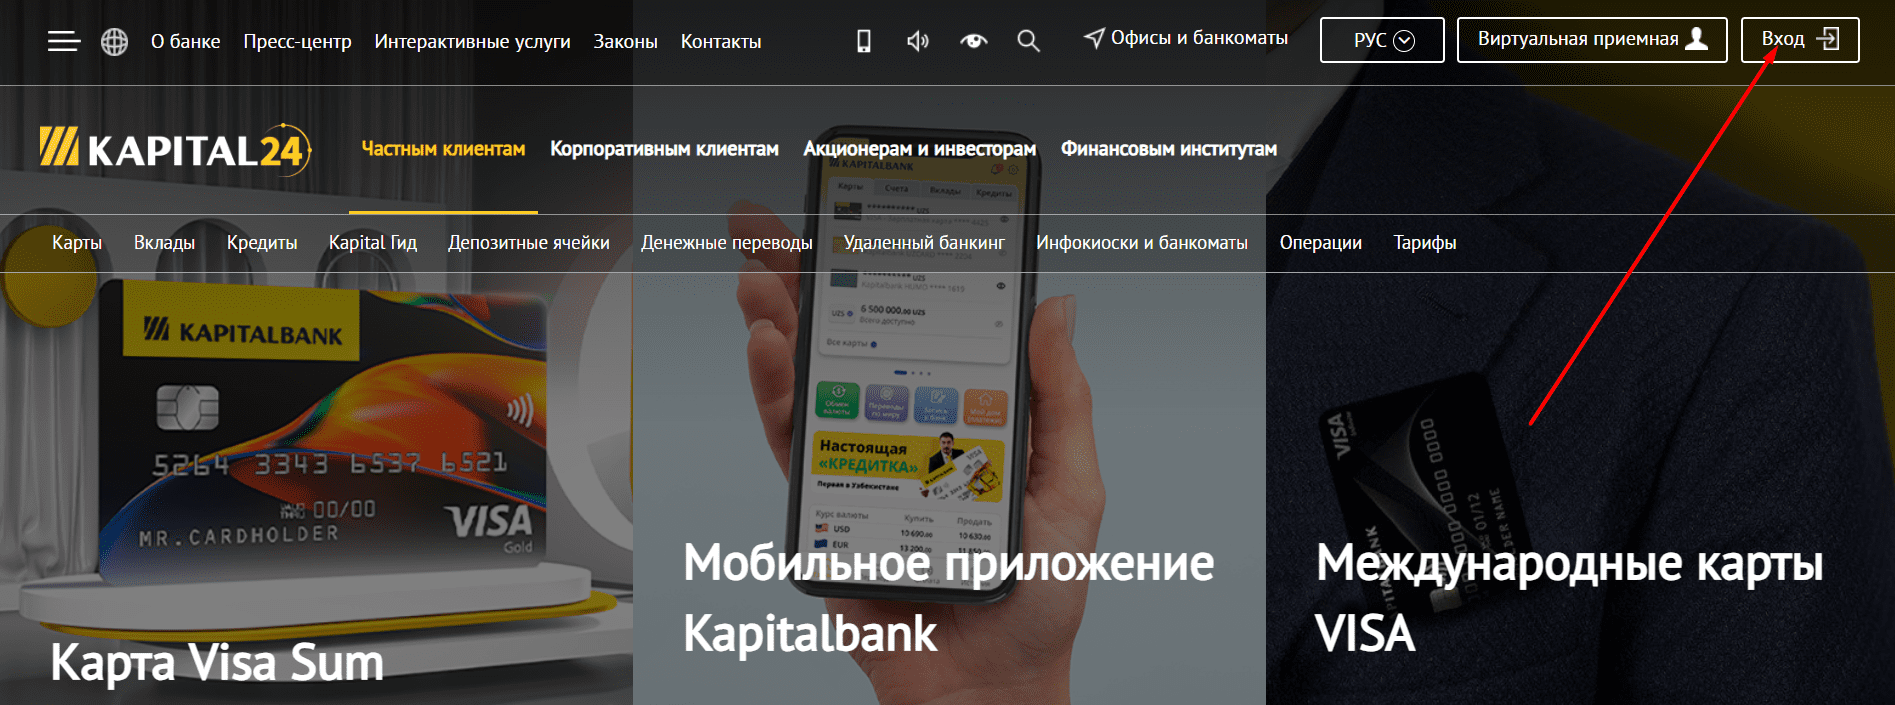 Капиталбанк (kapitalbank.uz)